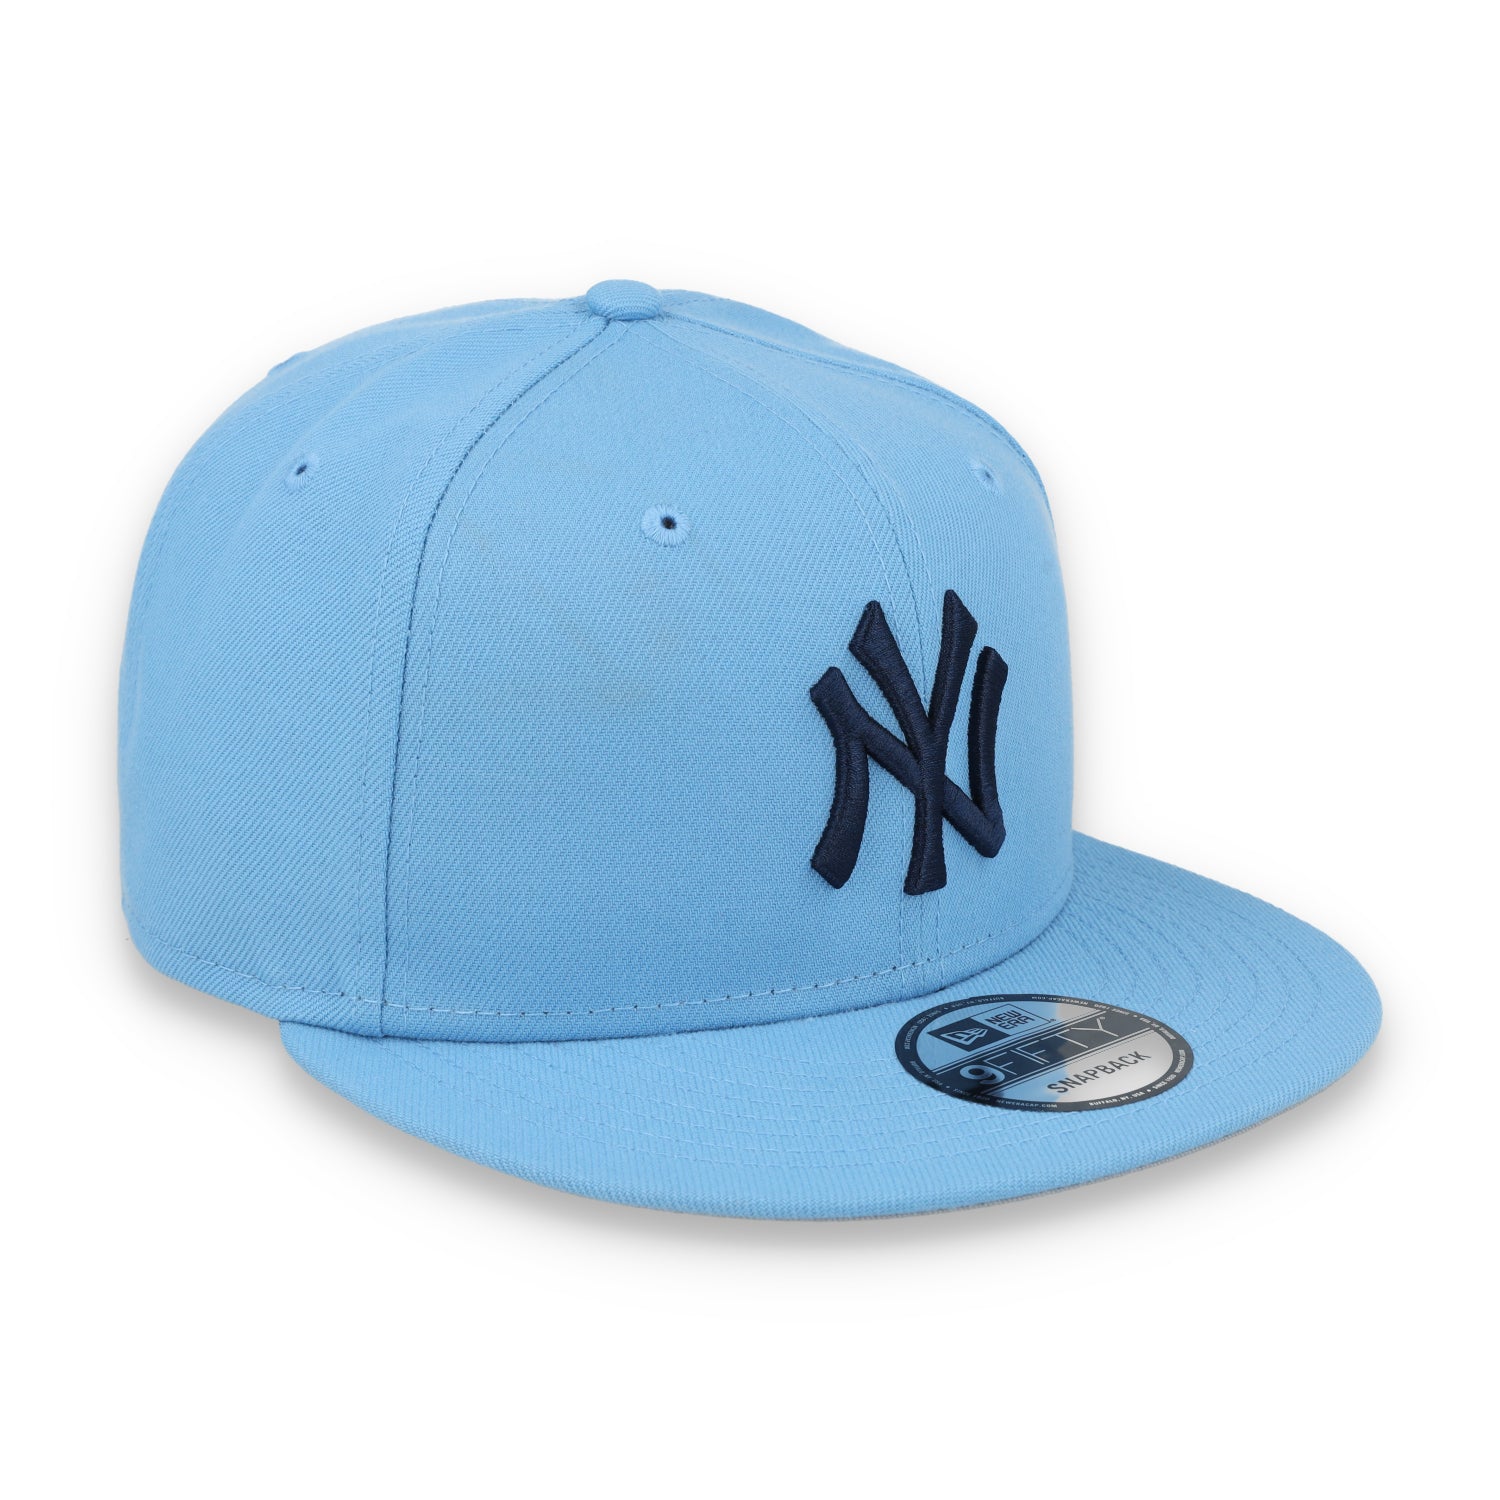 New Era New York Yankees 9FIFTY Snapback Hat - Sky Blue